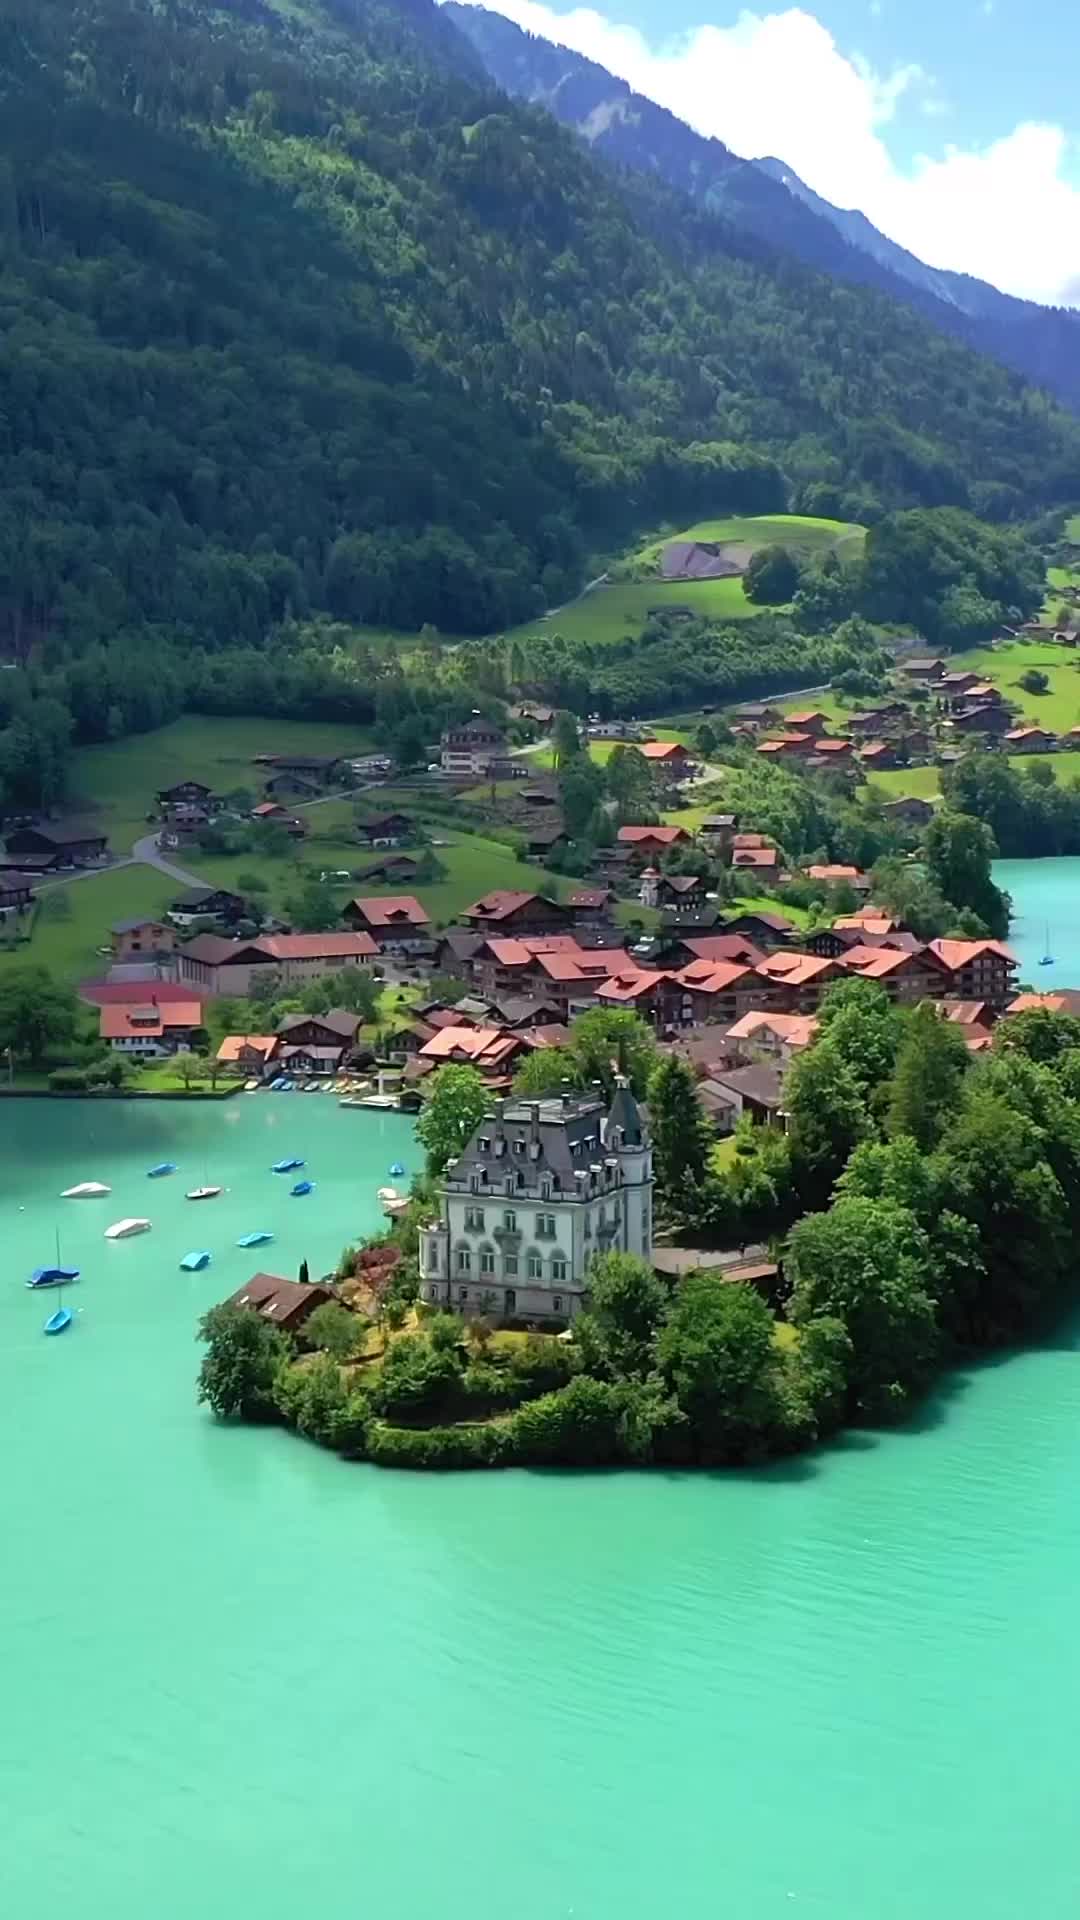 Switzerland's Hidden Gem: Iseltwald's Stunning Scenery